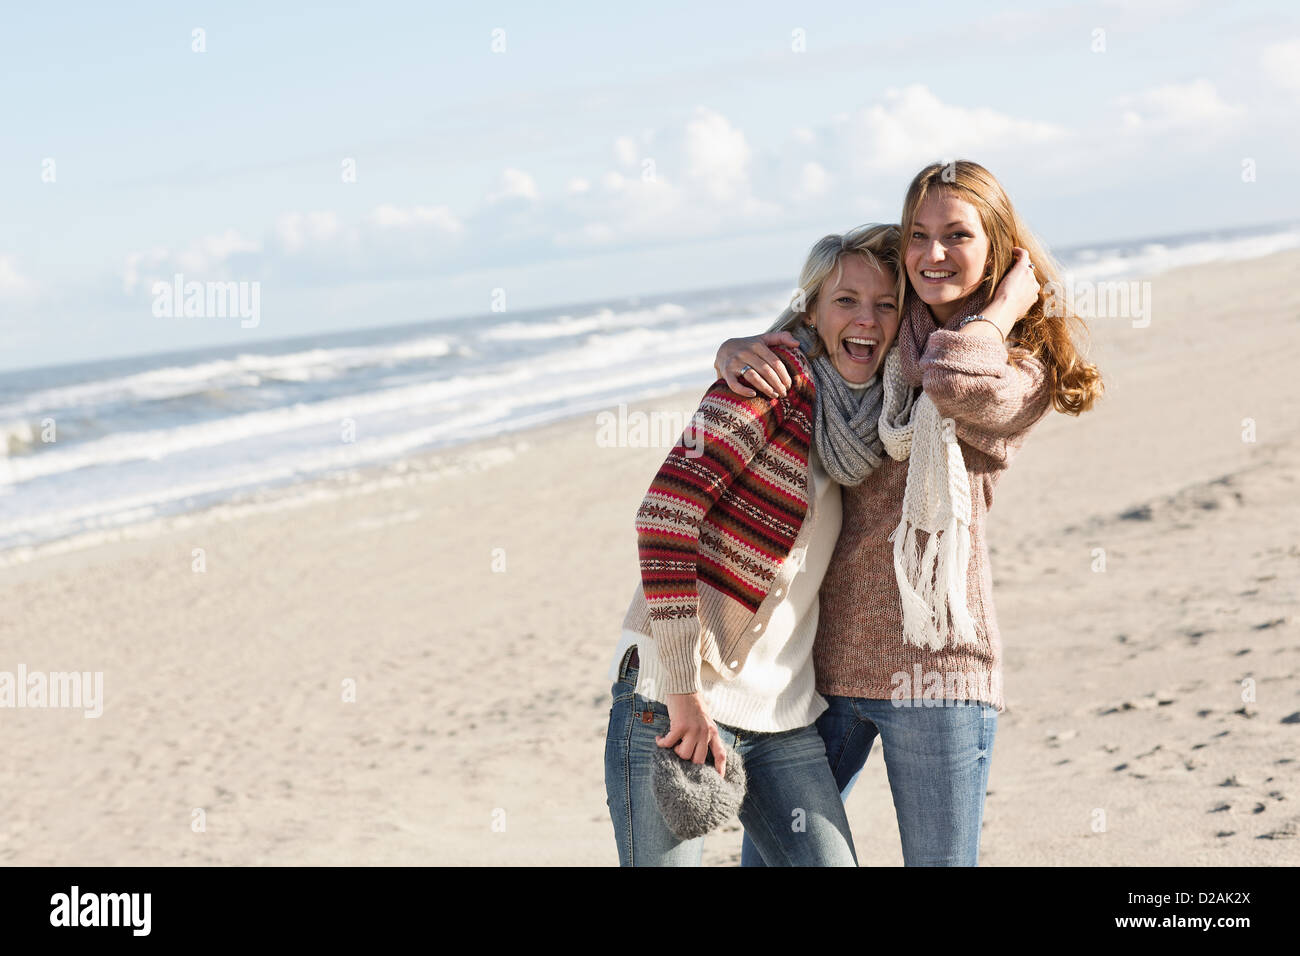 Smiling women hugging on beach Stock Photo